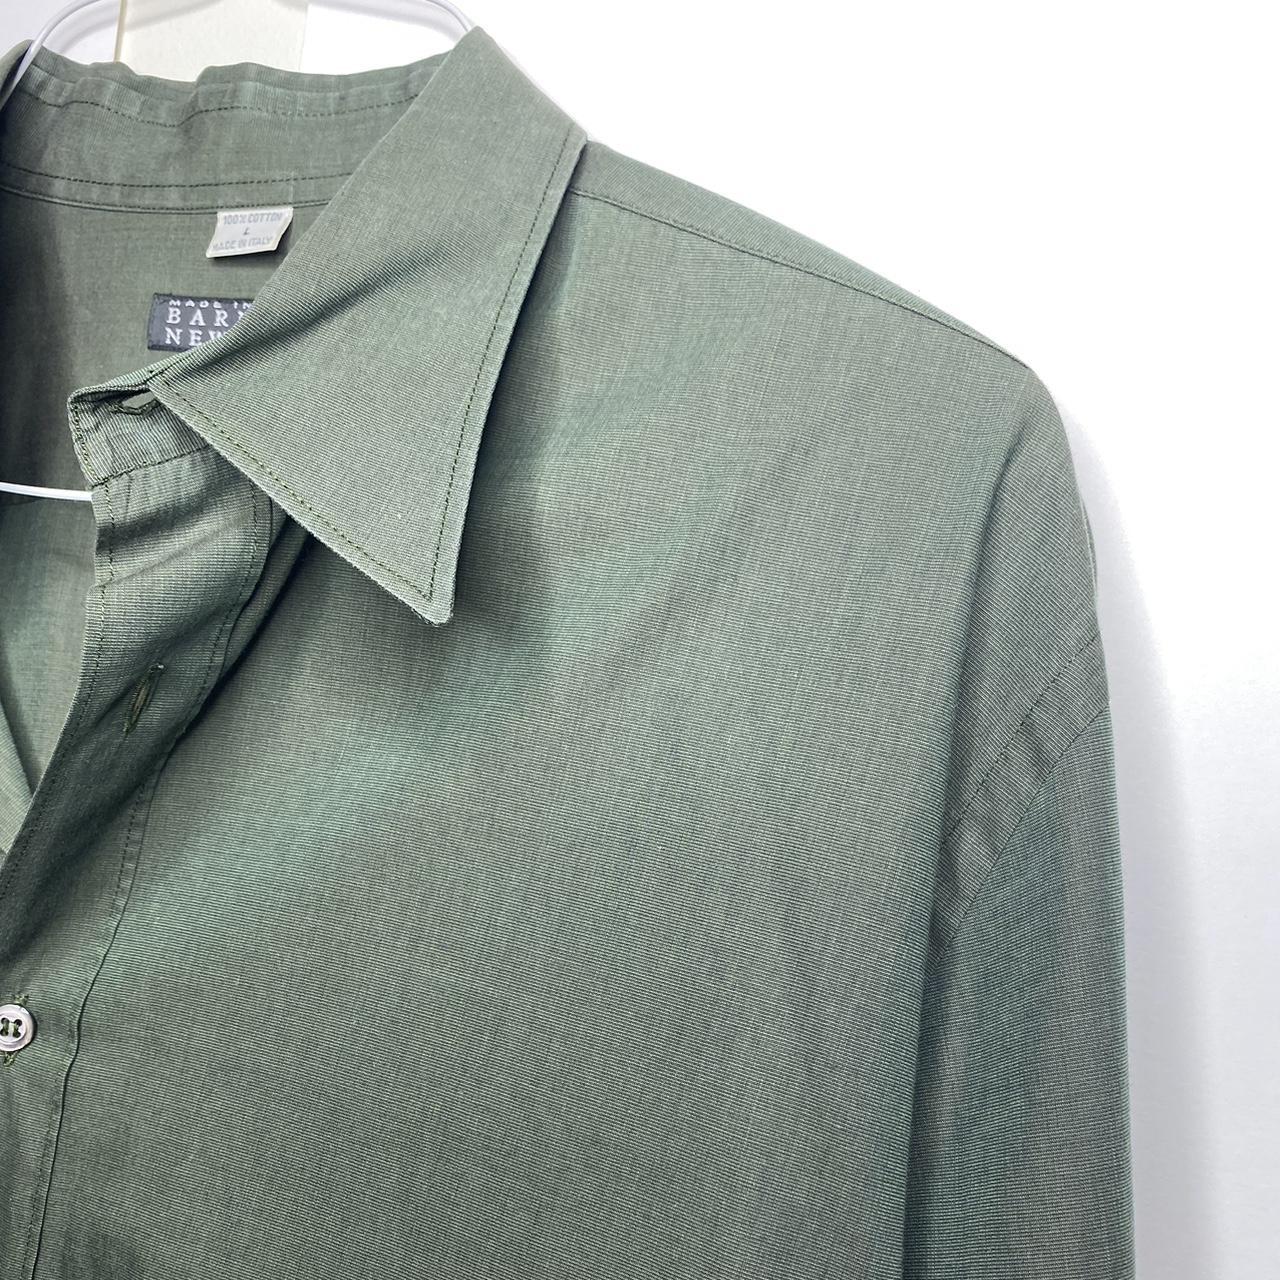 Barney's Men's Khaki and Green Shirt (2)